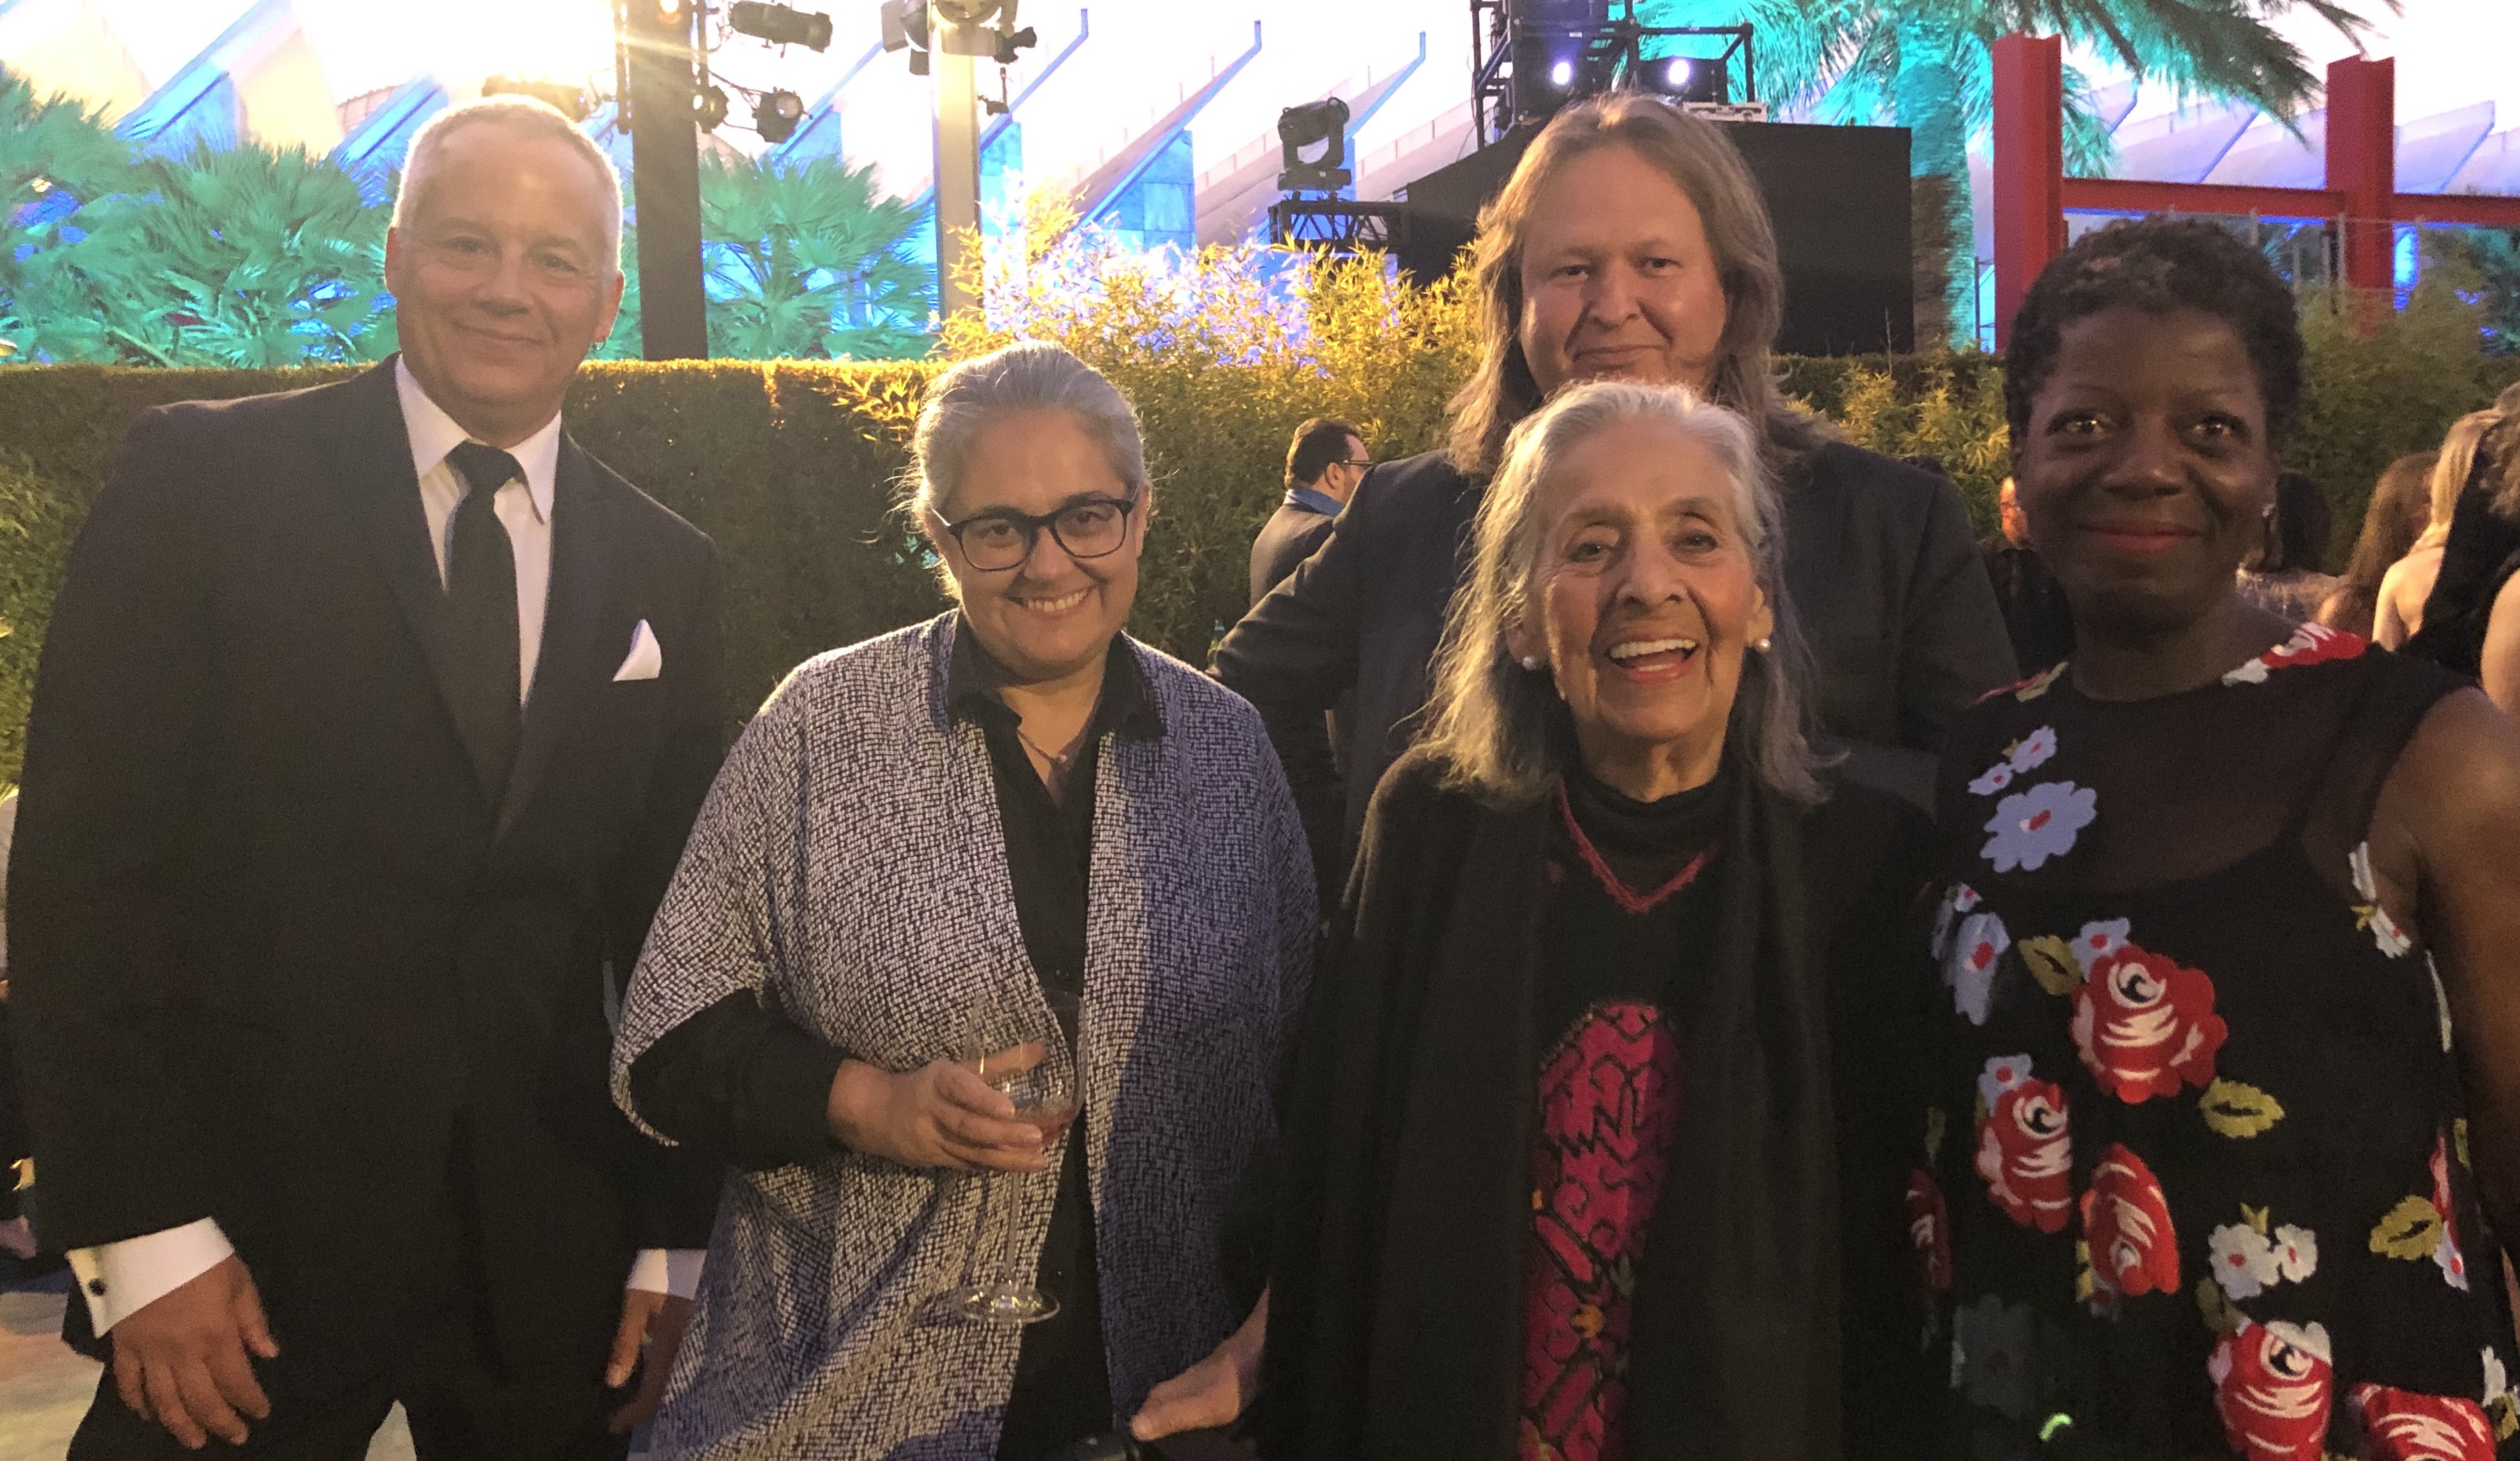 (Left to right) John Mullican, Tacita Dean, Mathew Hale, Luchita Hurtado, and Thelma Golden at the 2019 LACMA Art + Film Gala, photo by Jennifer King